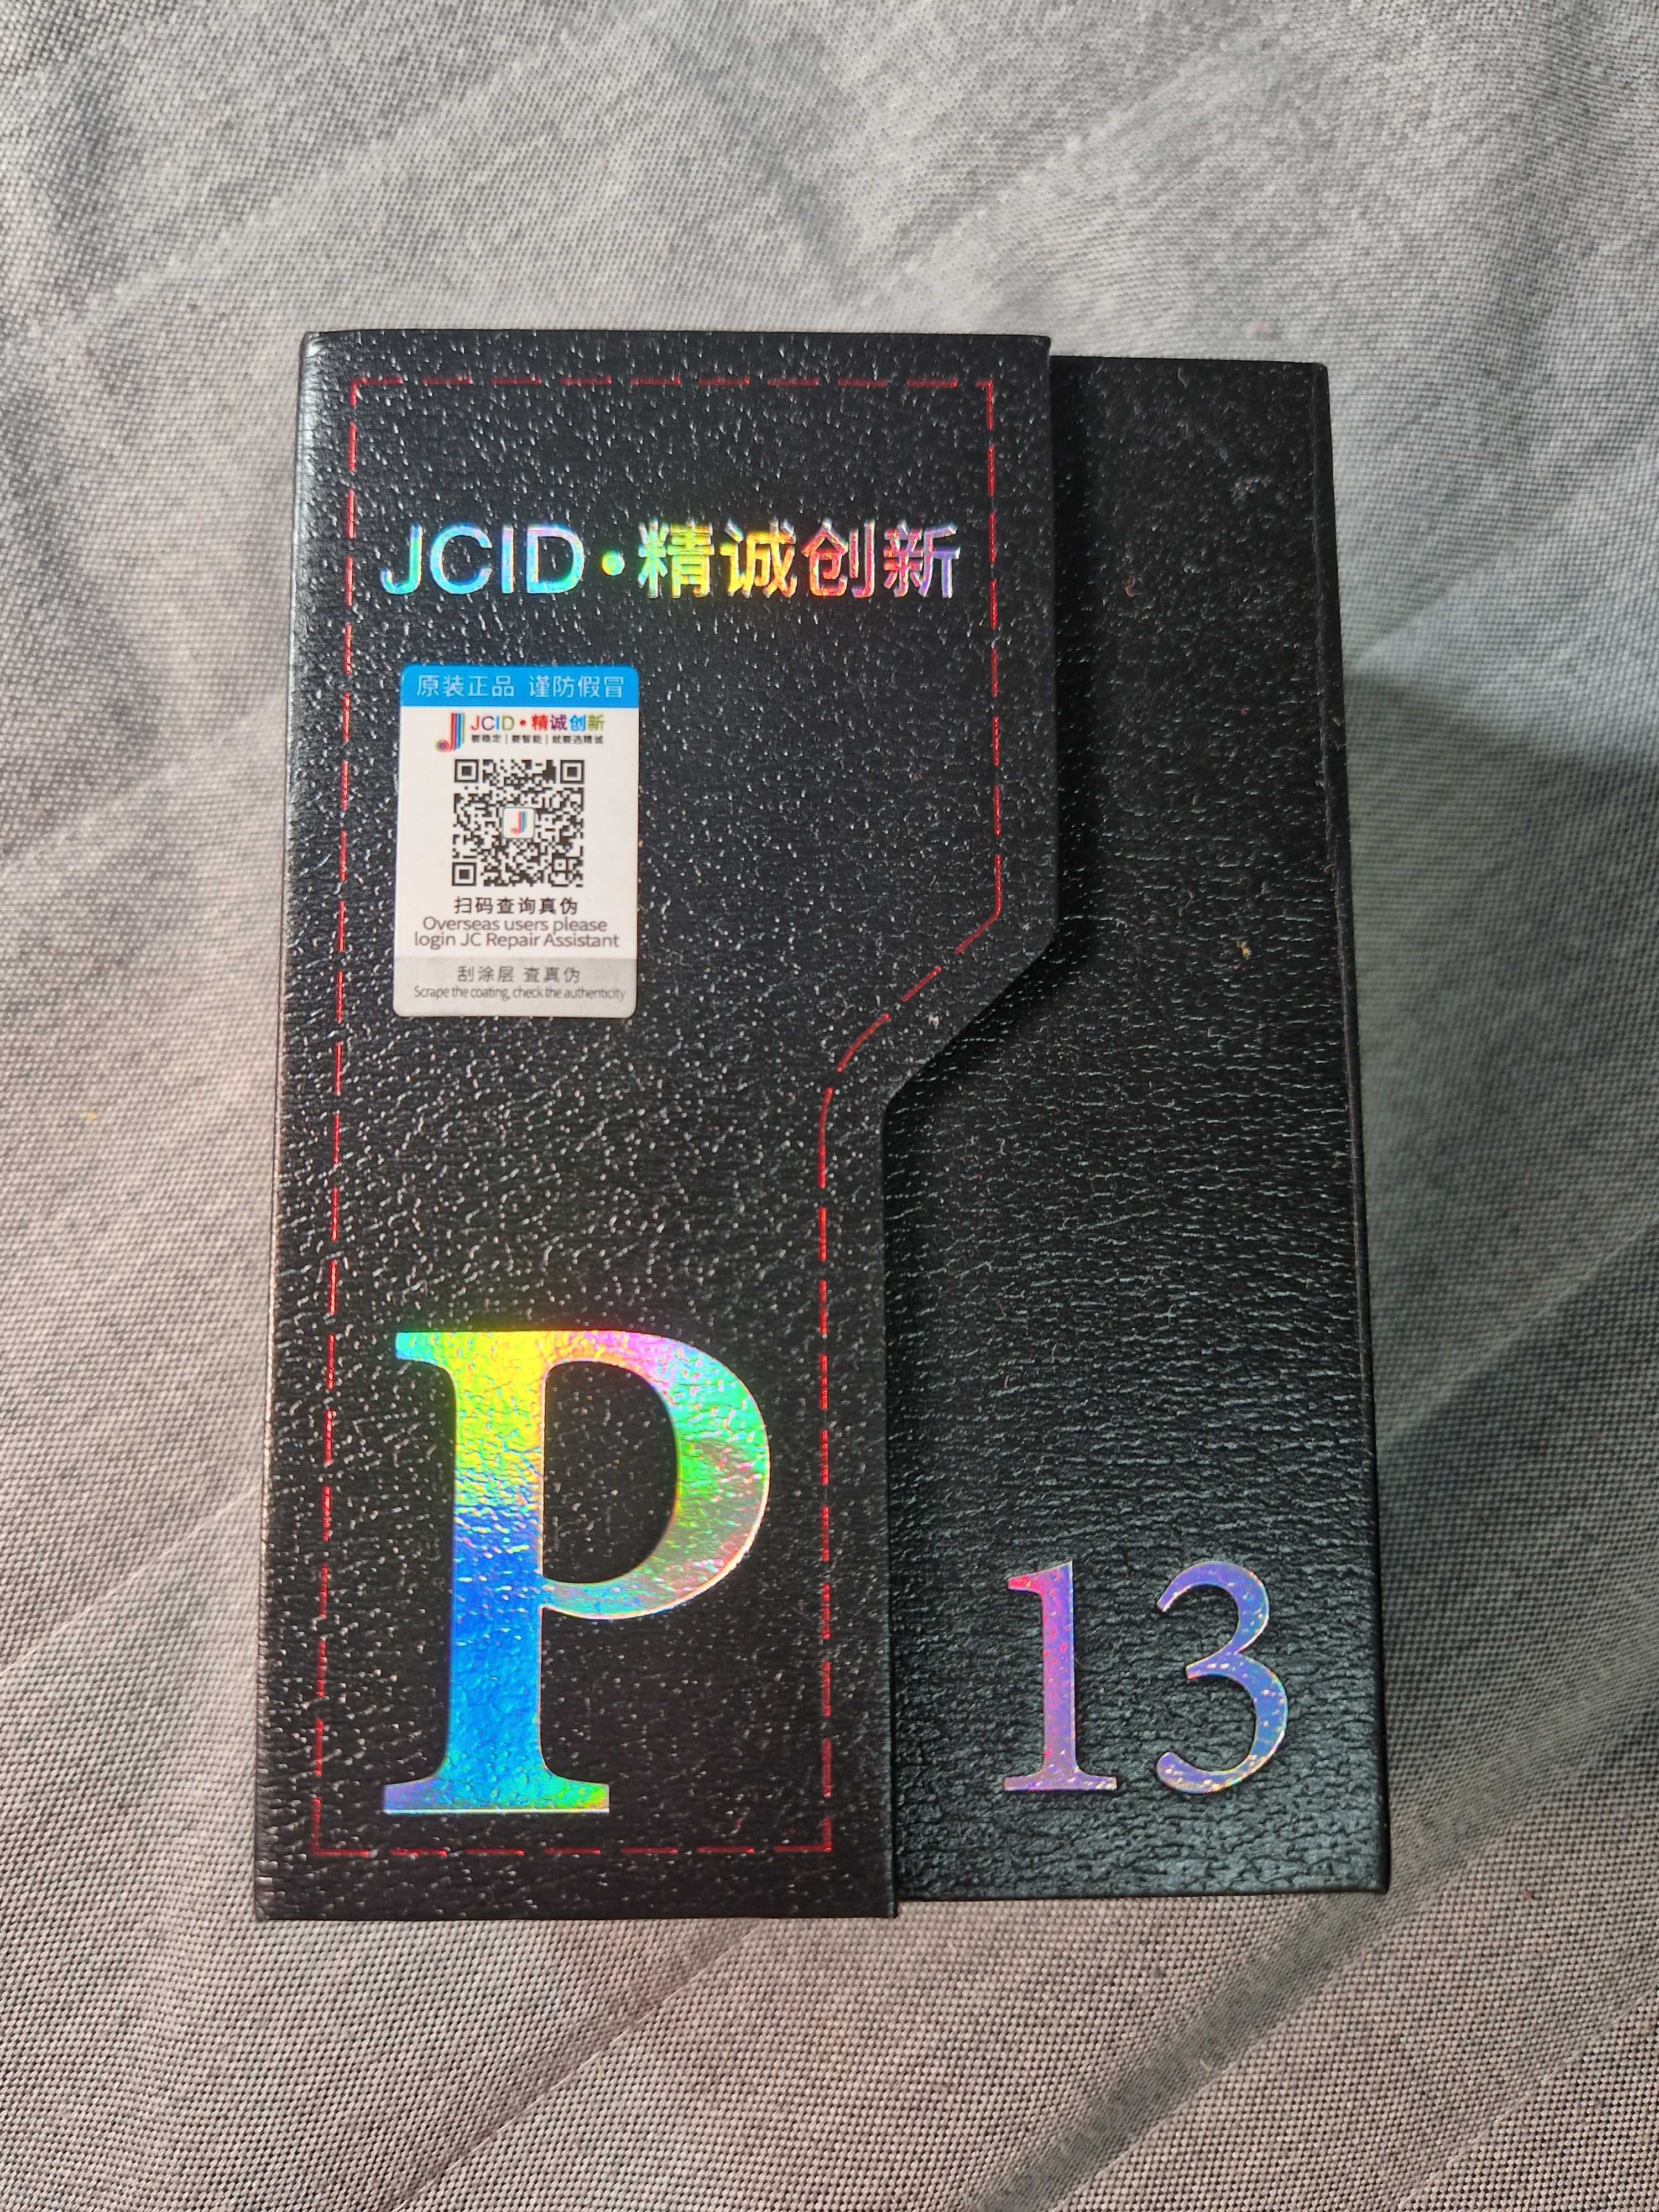 Programator memorii nand JC P13 pentru iphone sau macbook